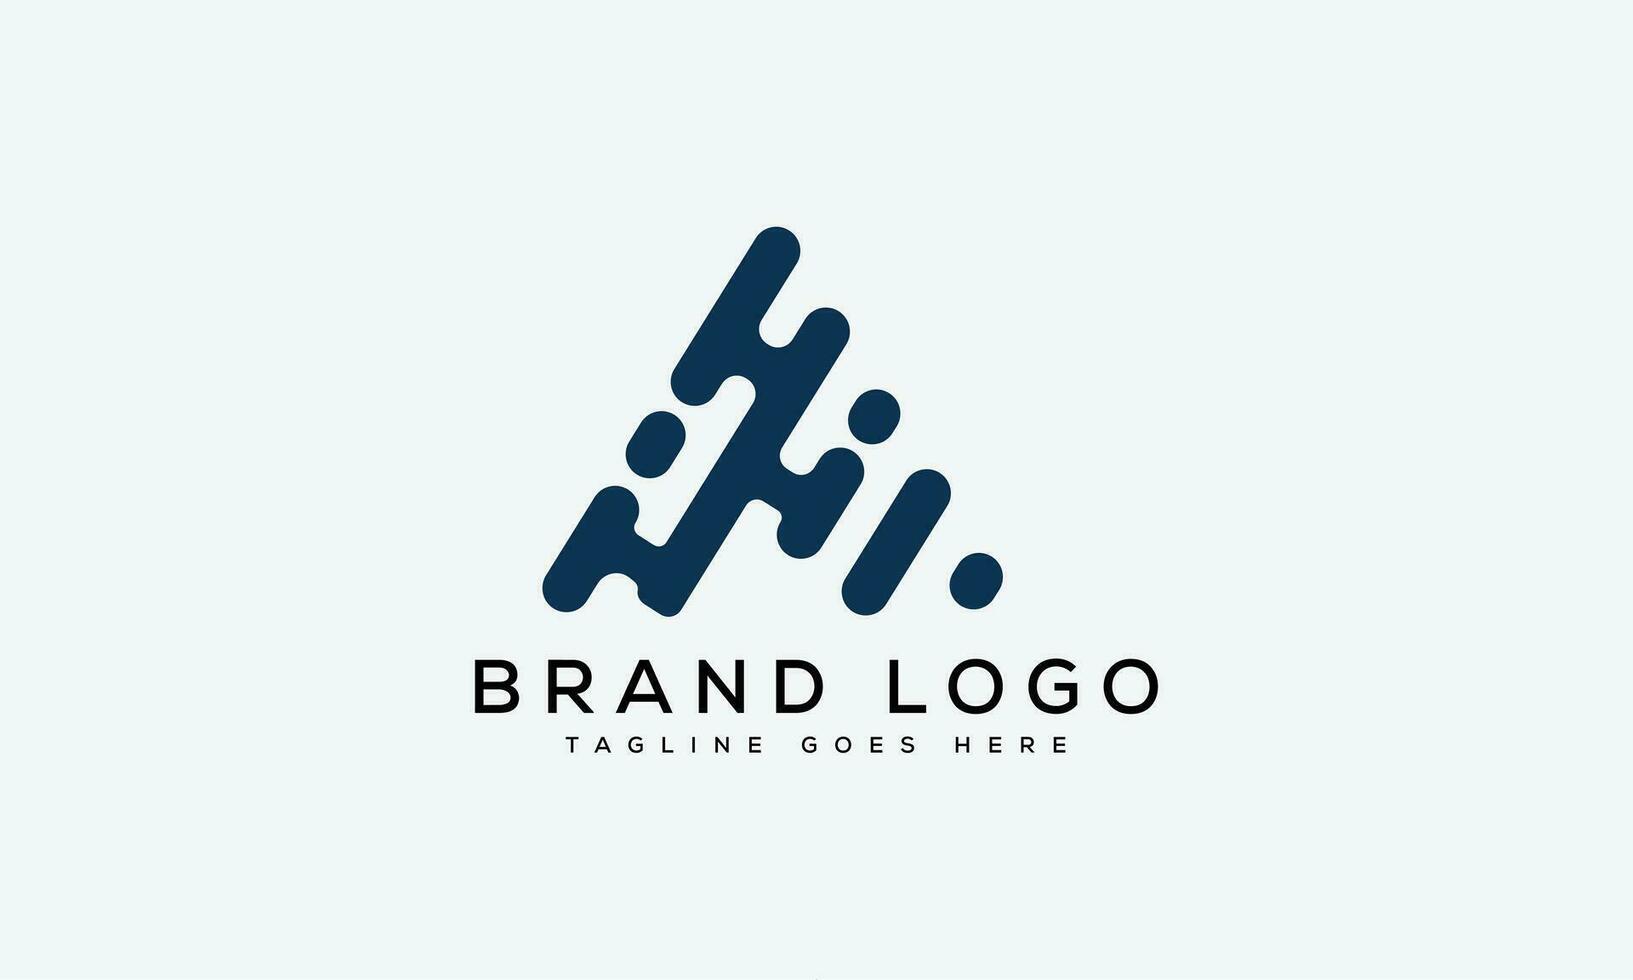 letter A logo design vector template design for brand.